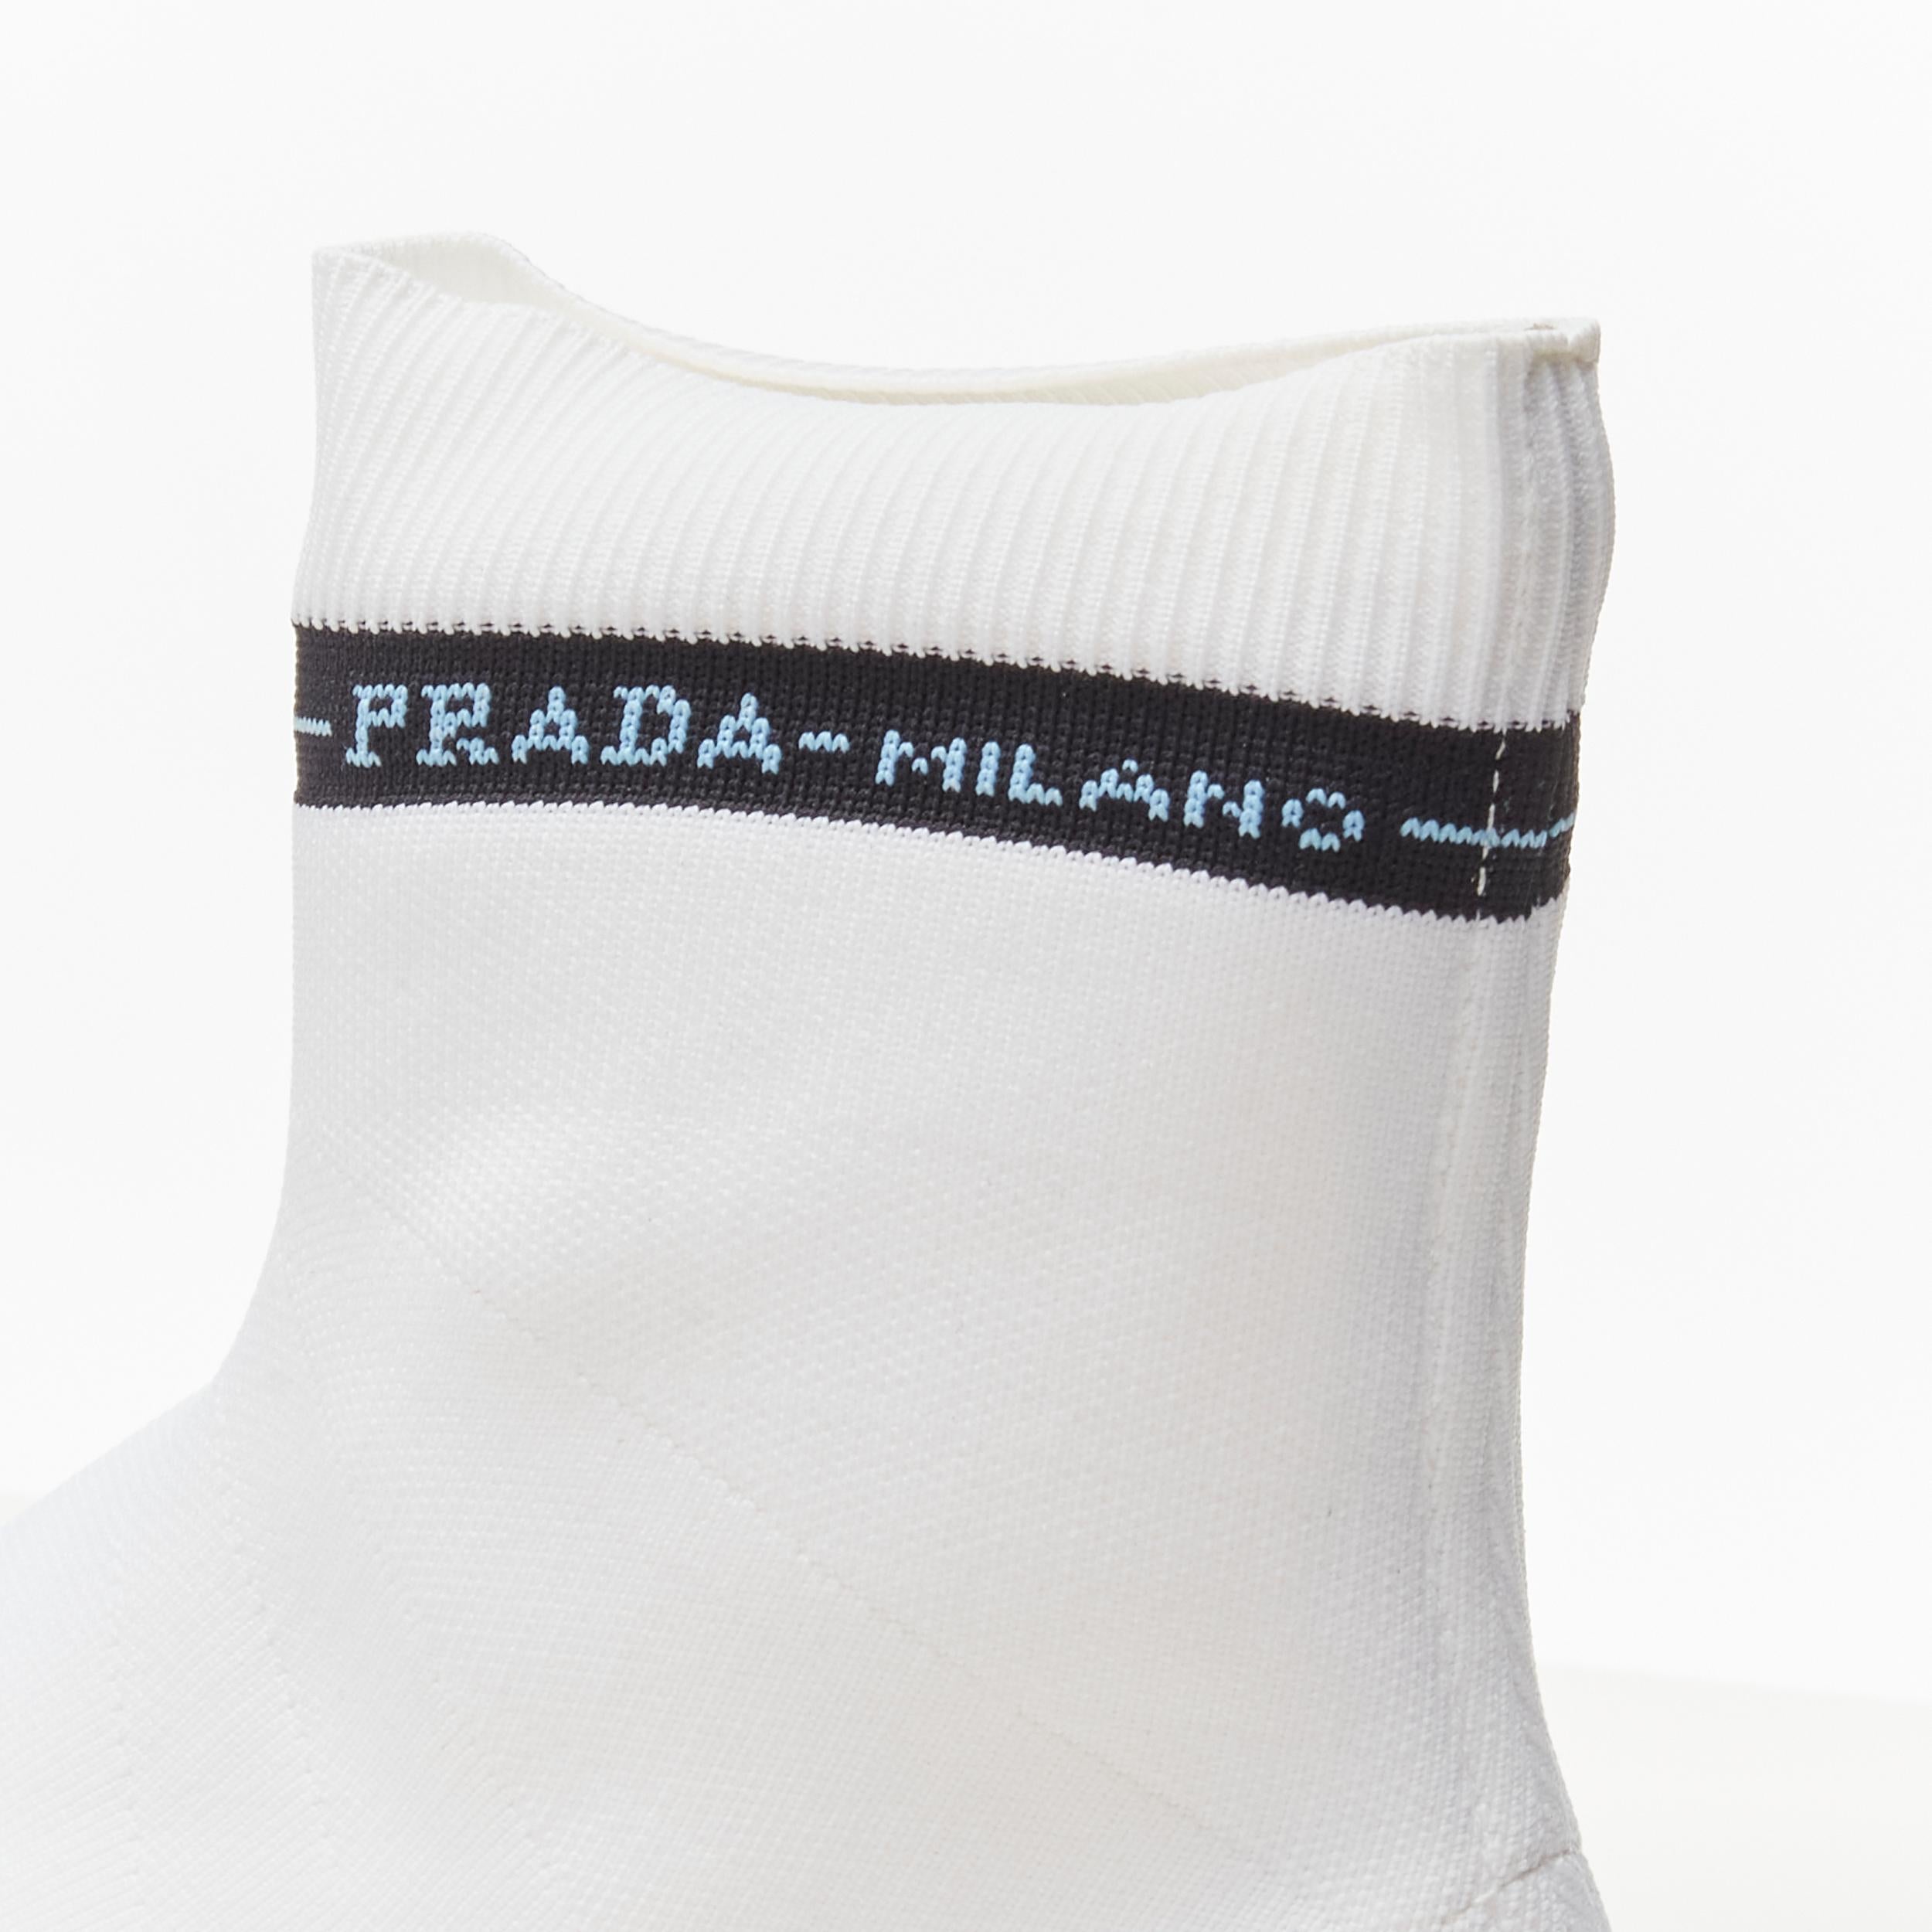 PRADA Milano black logo band white sock knit high top sneaker EU35.5 
Reference: ANWU/A00369 
Brand: Prada 
Designer: Miuccia Prada 
Material: Fabric 
Color: White 
Pattern: Solid 
Closure: Stretch 
Extra Detail: Black Prada Milano logo intarsia at